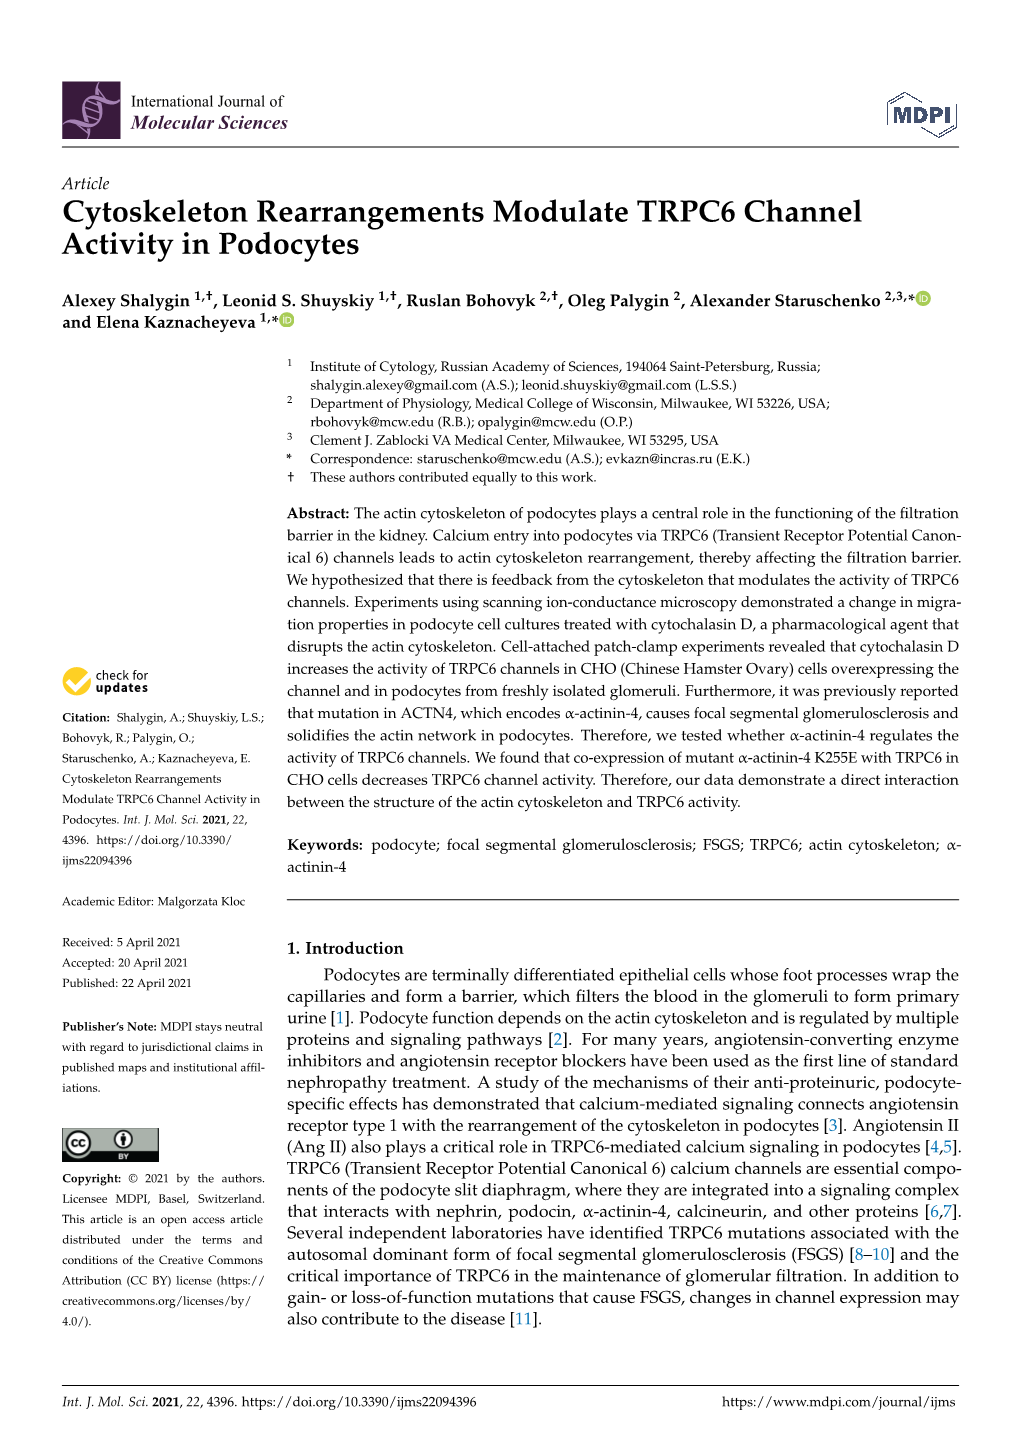 Cytoskeleton Rearrangements Modulate TRPC6 Channel Activity in Podocytes